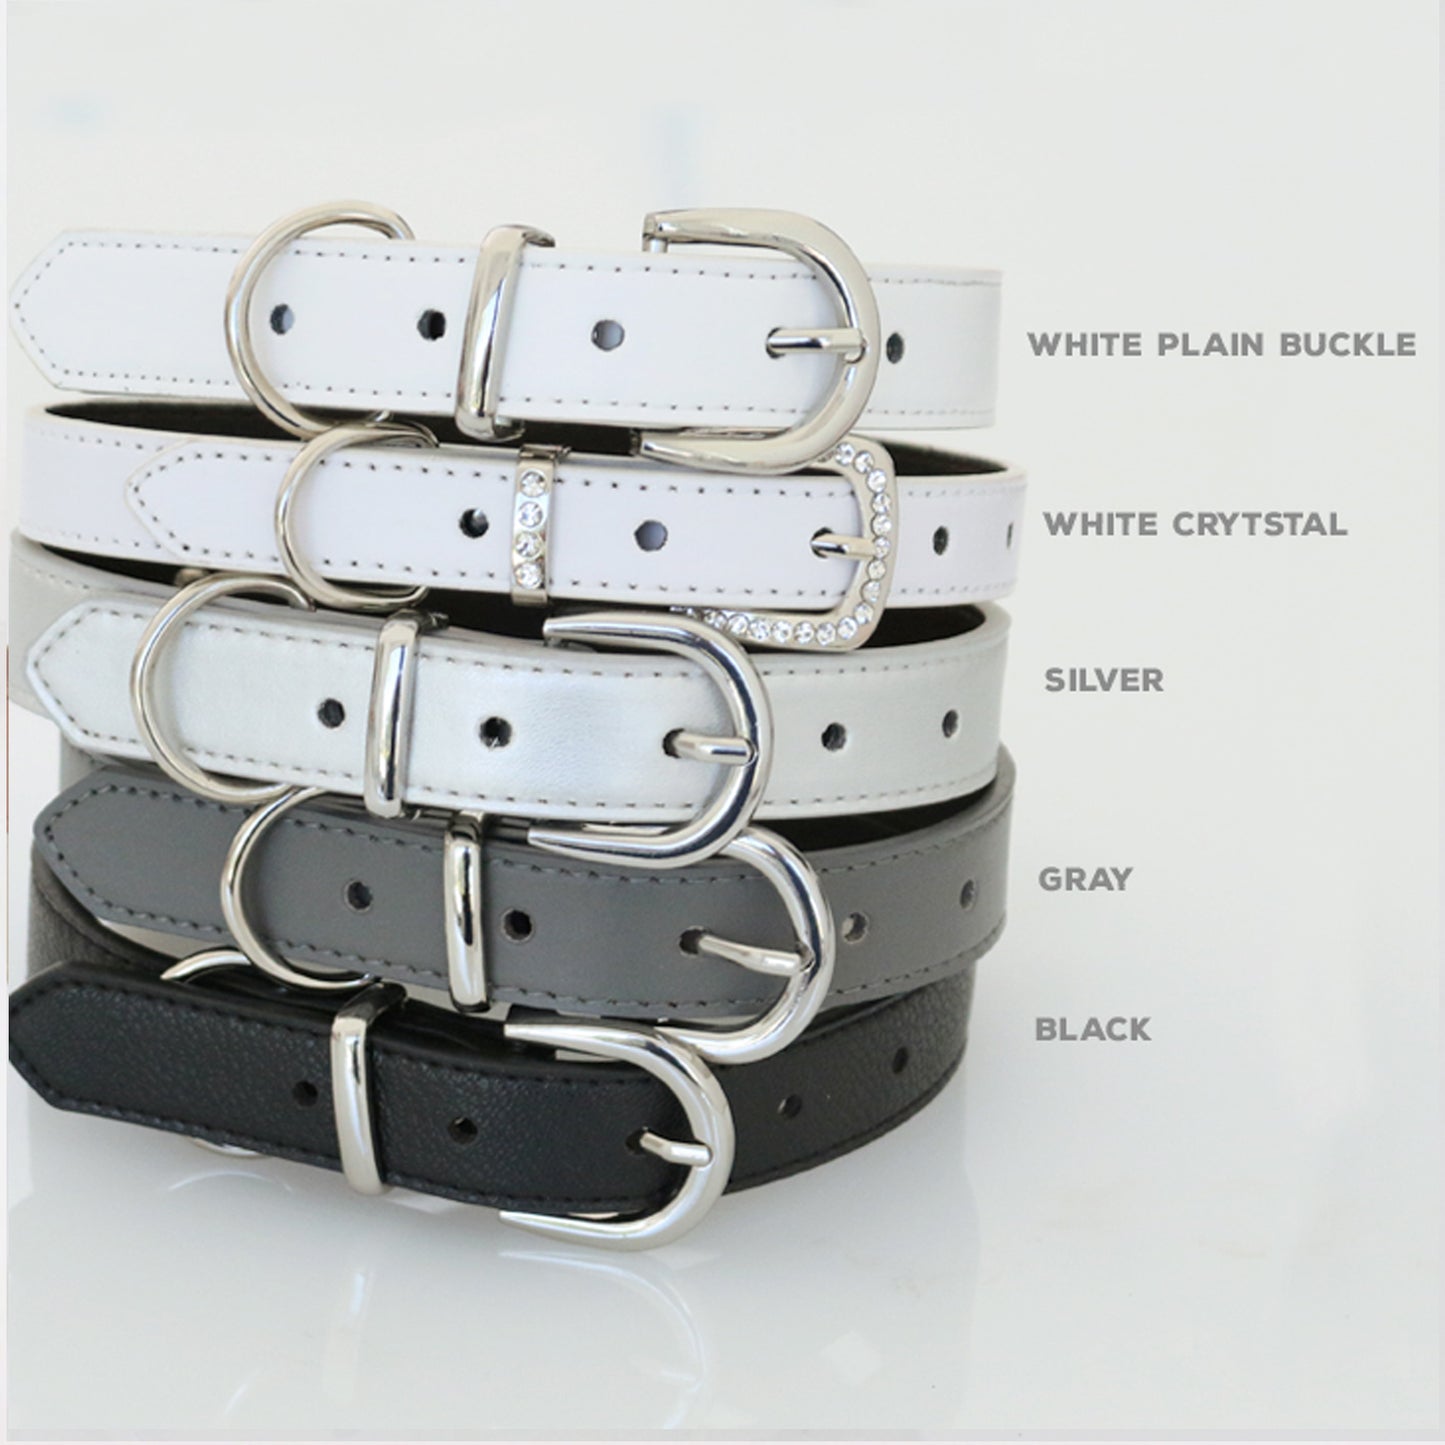 Lavender Dog Bow collar, Pet wedding accessory, Ace charm , Wedding dog collar